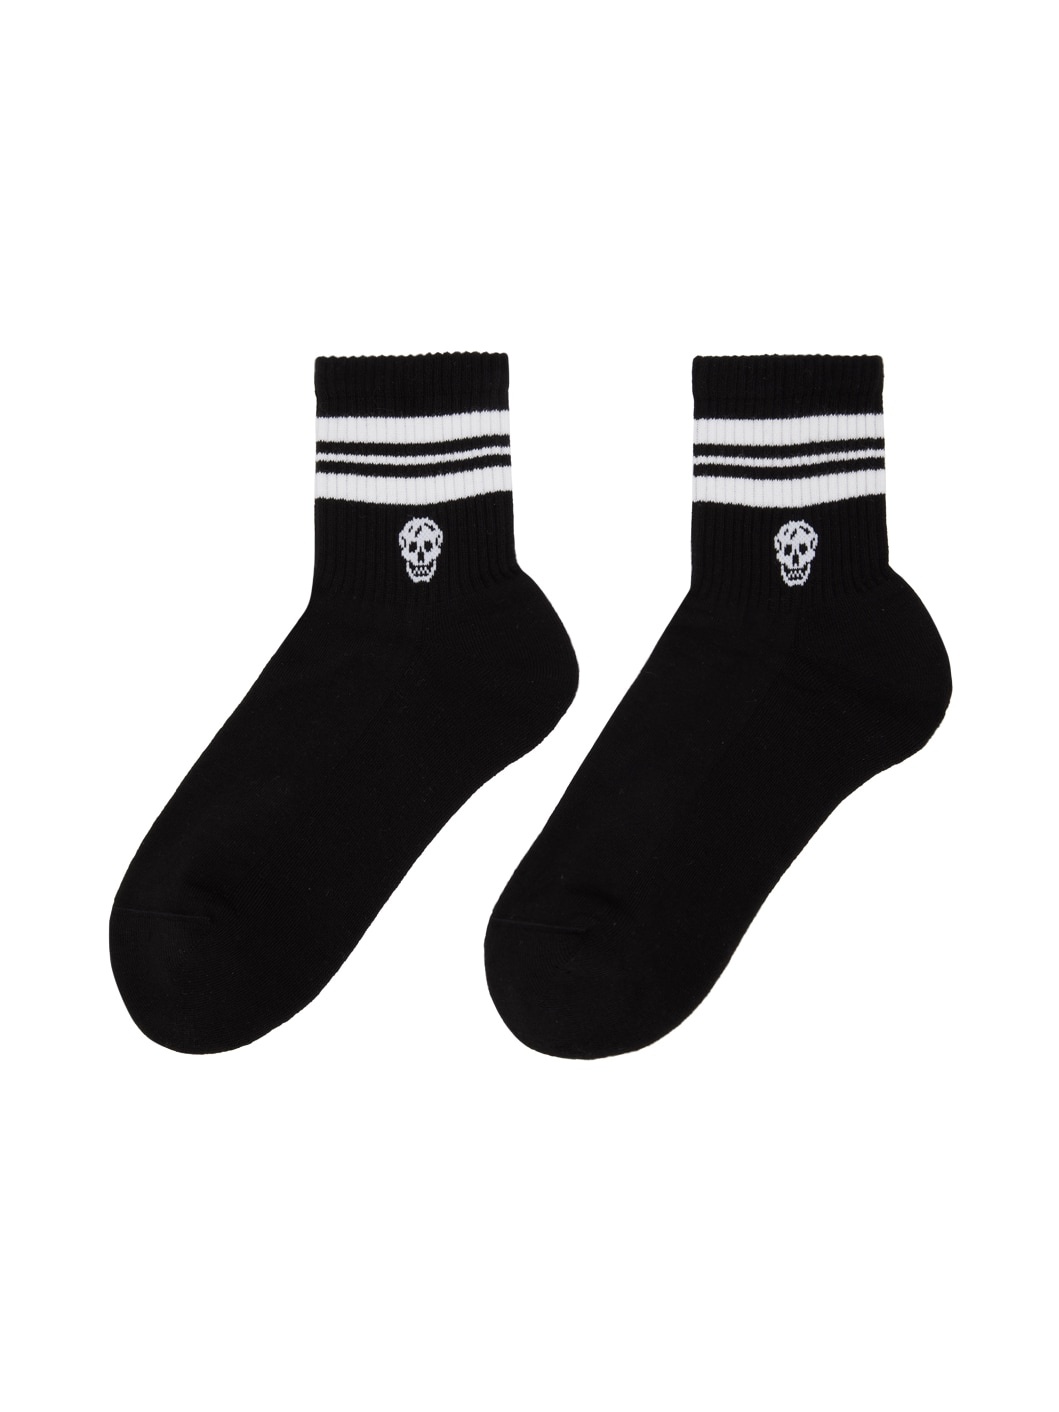 Black Skull Sport Socks - 2